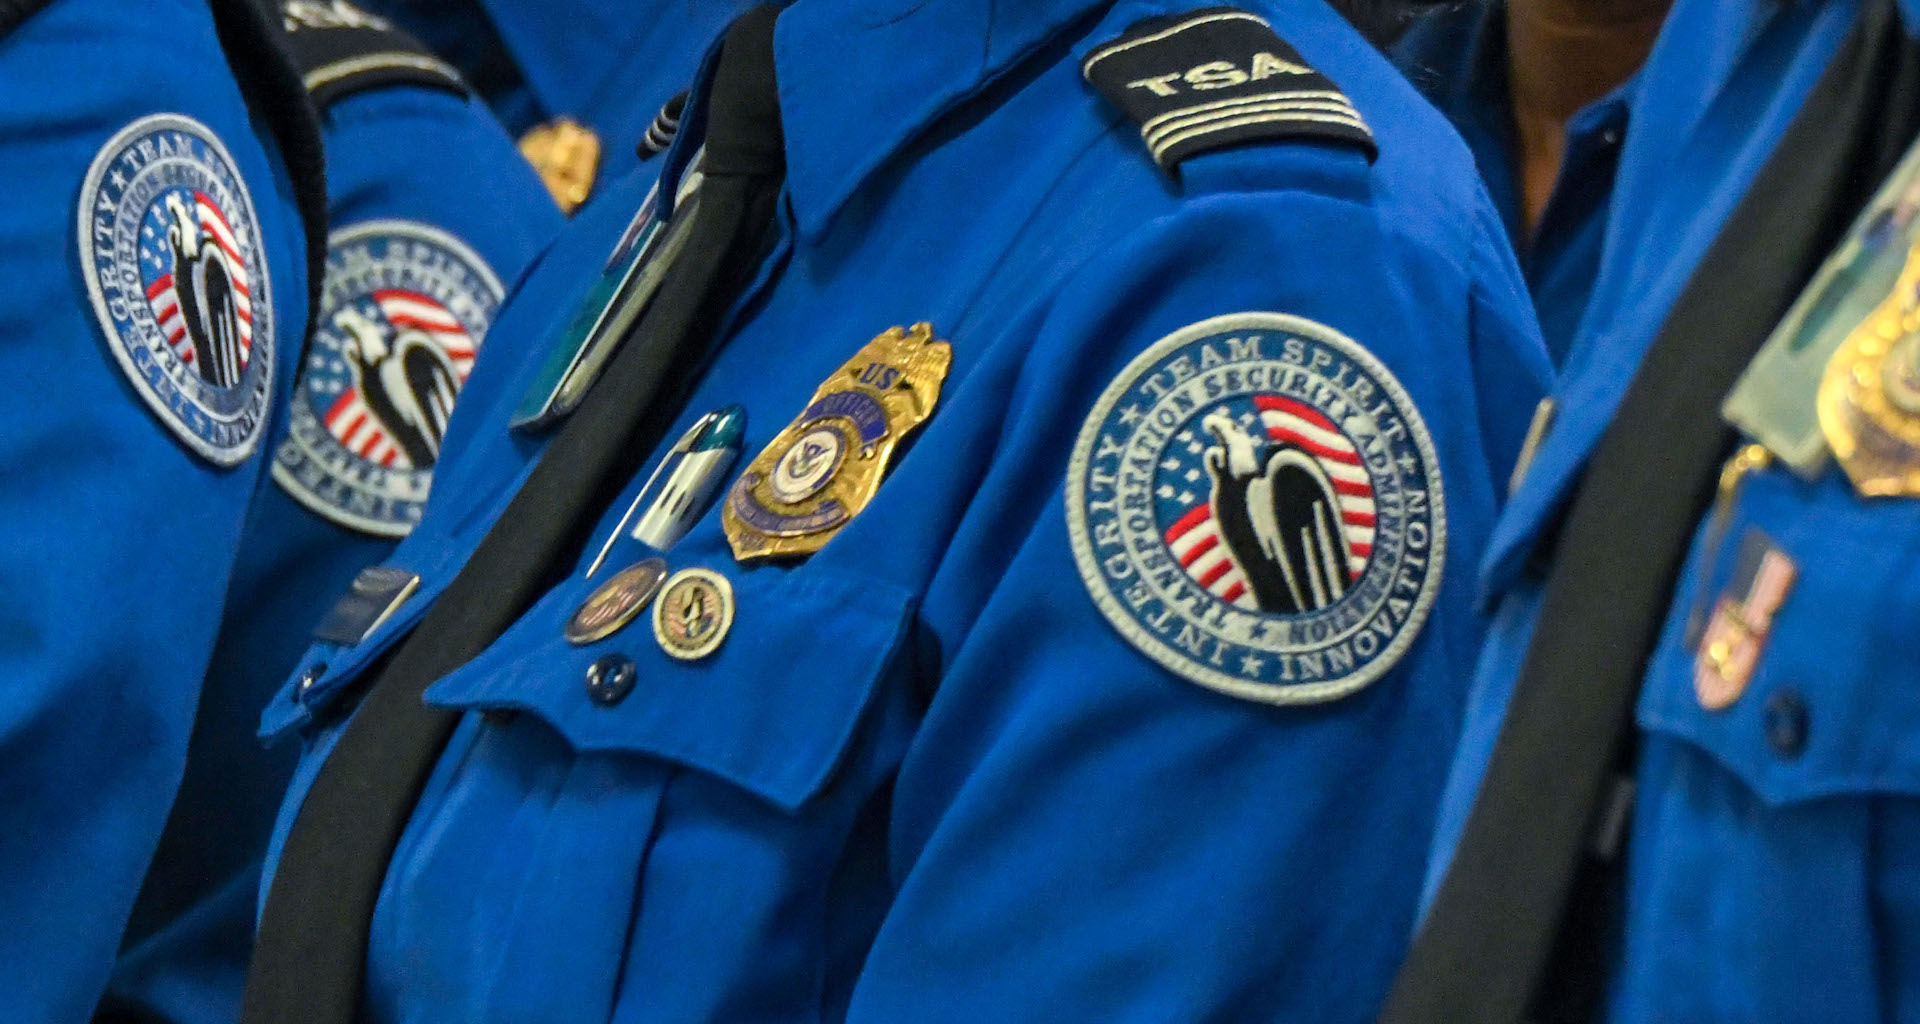 Airport security: TSA testing new tech at Las Vegas airport